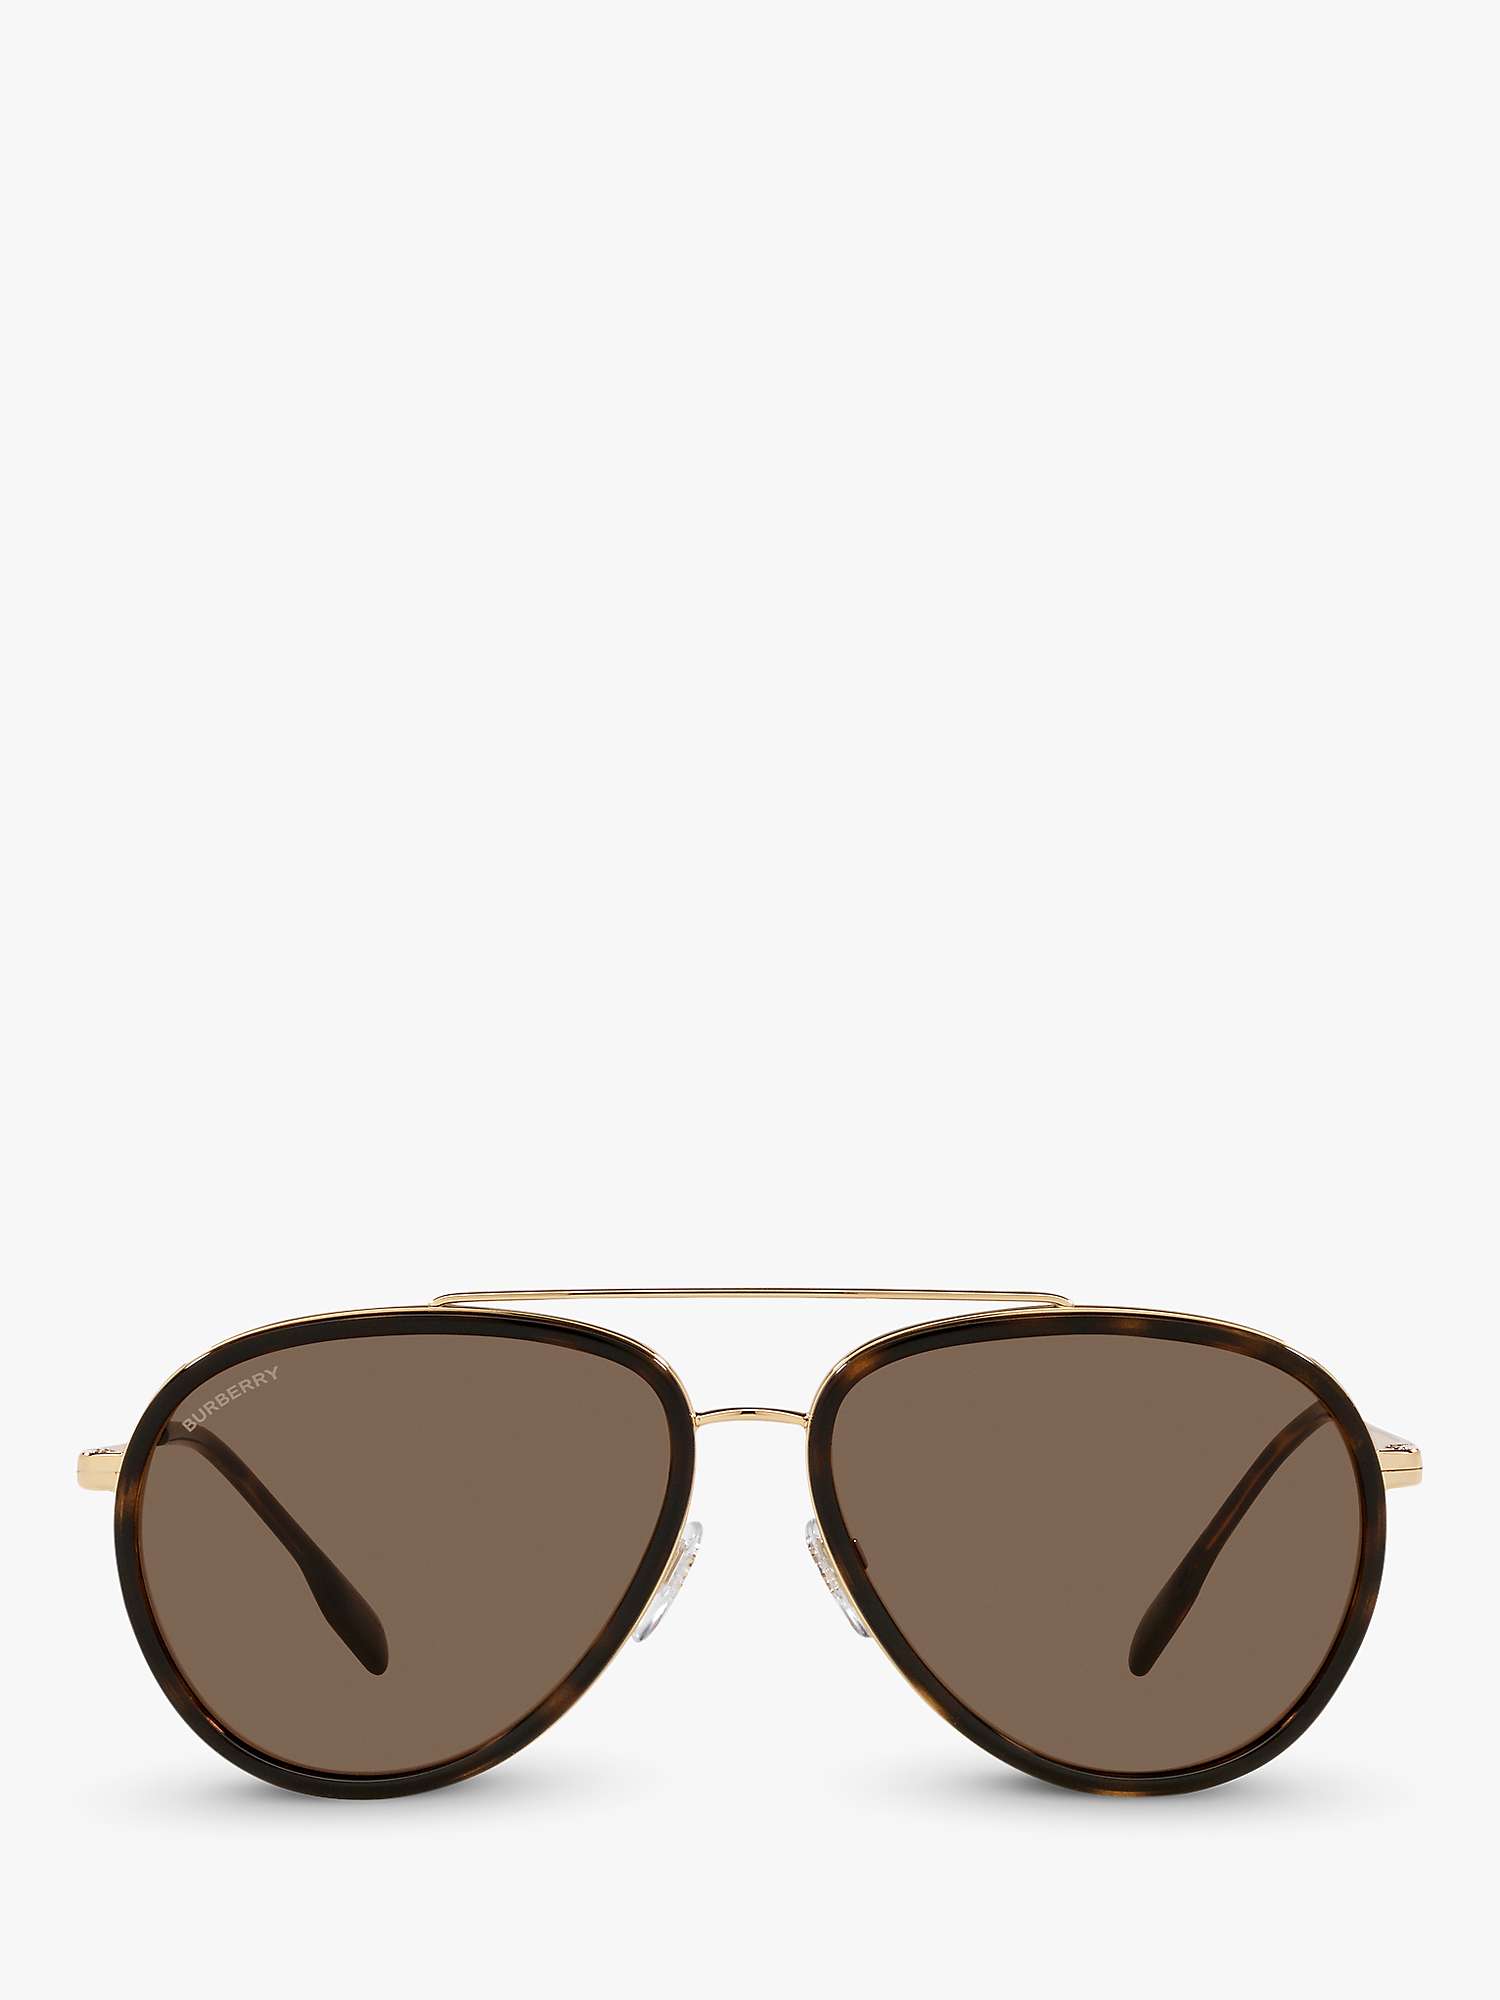 Buy Burberry BE3125 Men's Oliver Aviator Sunglasses, Gold/Brown Online at johnlewis.com